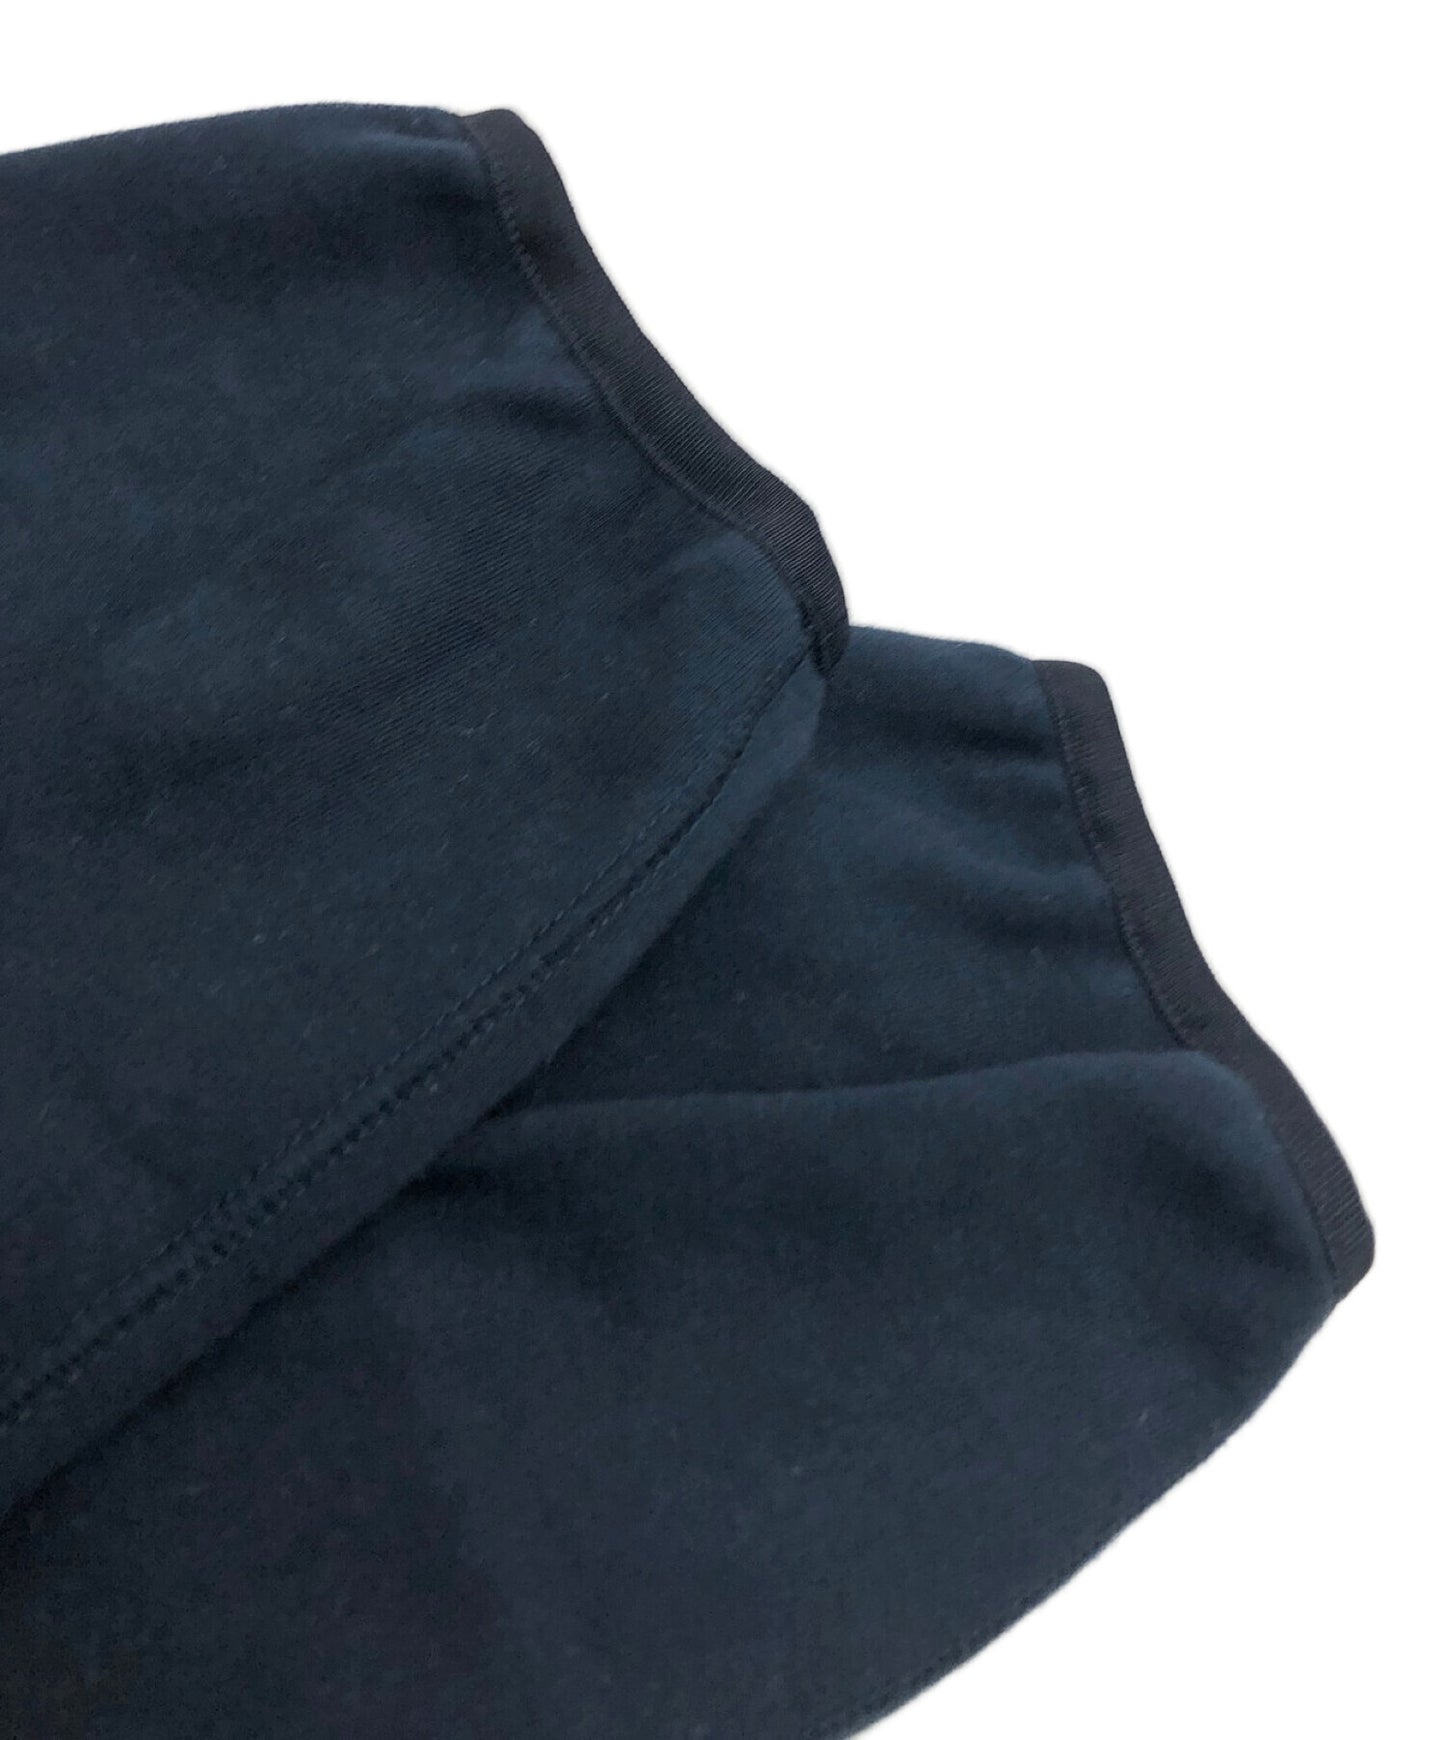 COMME des GARCONS HOMME Cotton filled jersey MILITALLY LINER HK-T004